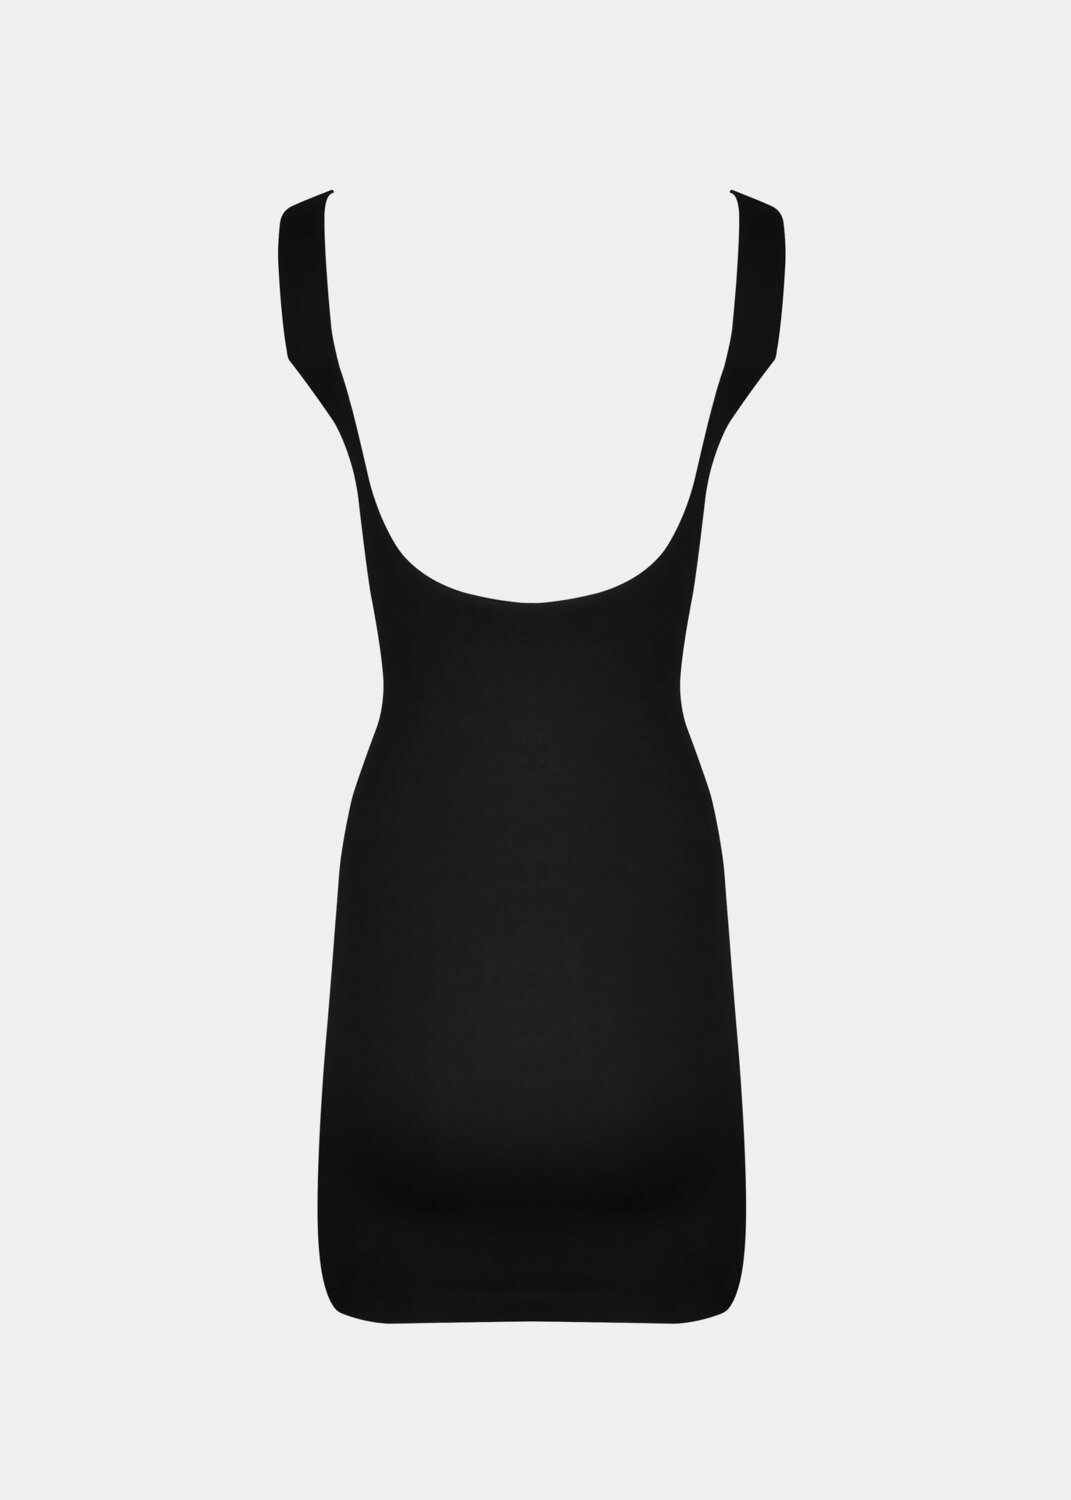 Comfort Lady Slips Inner Wear Size-M Sleeveless Col-052,Black in